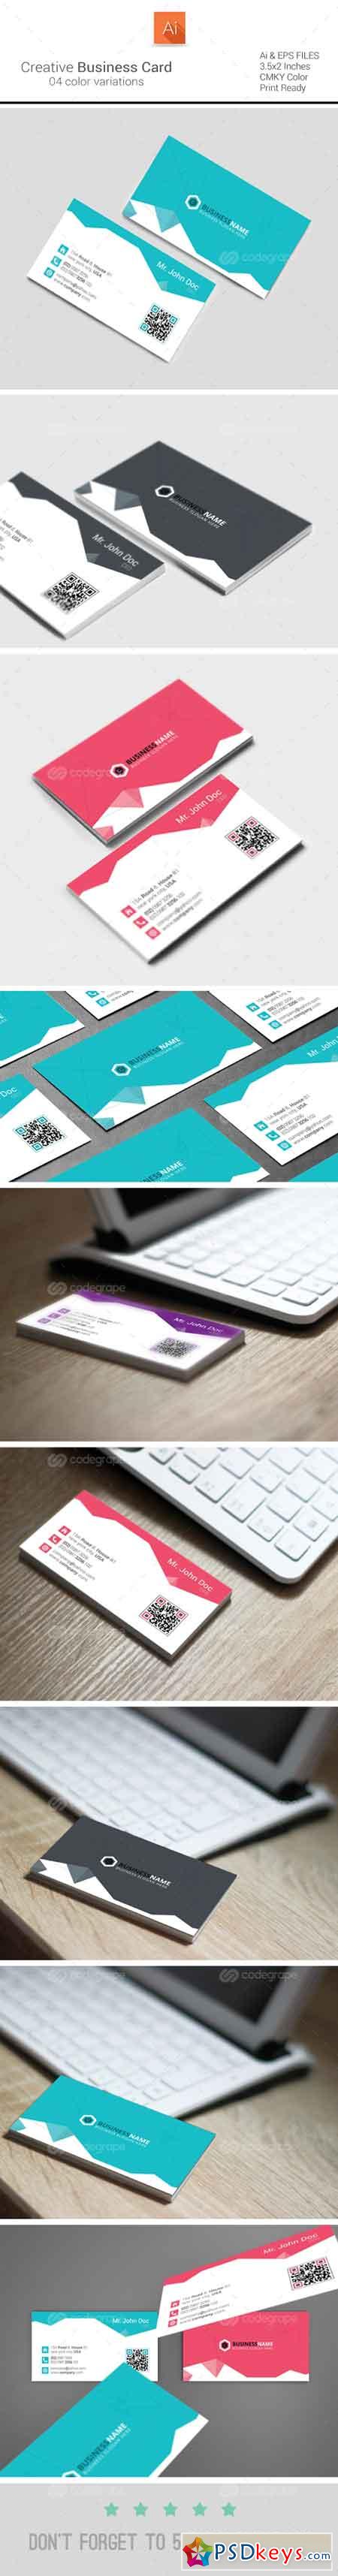 Creative Business Card Design 6213